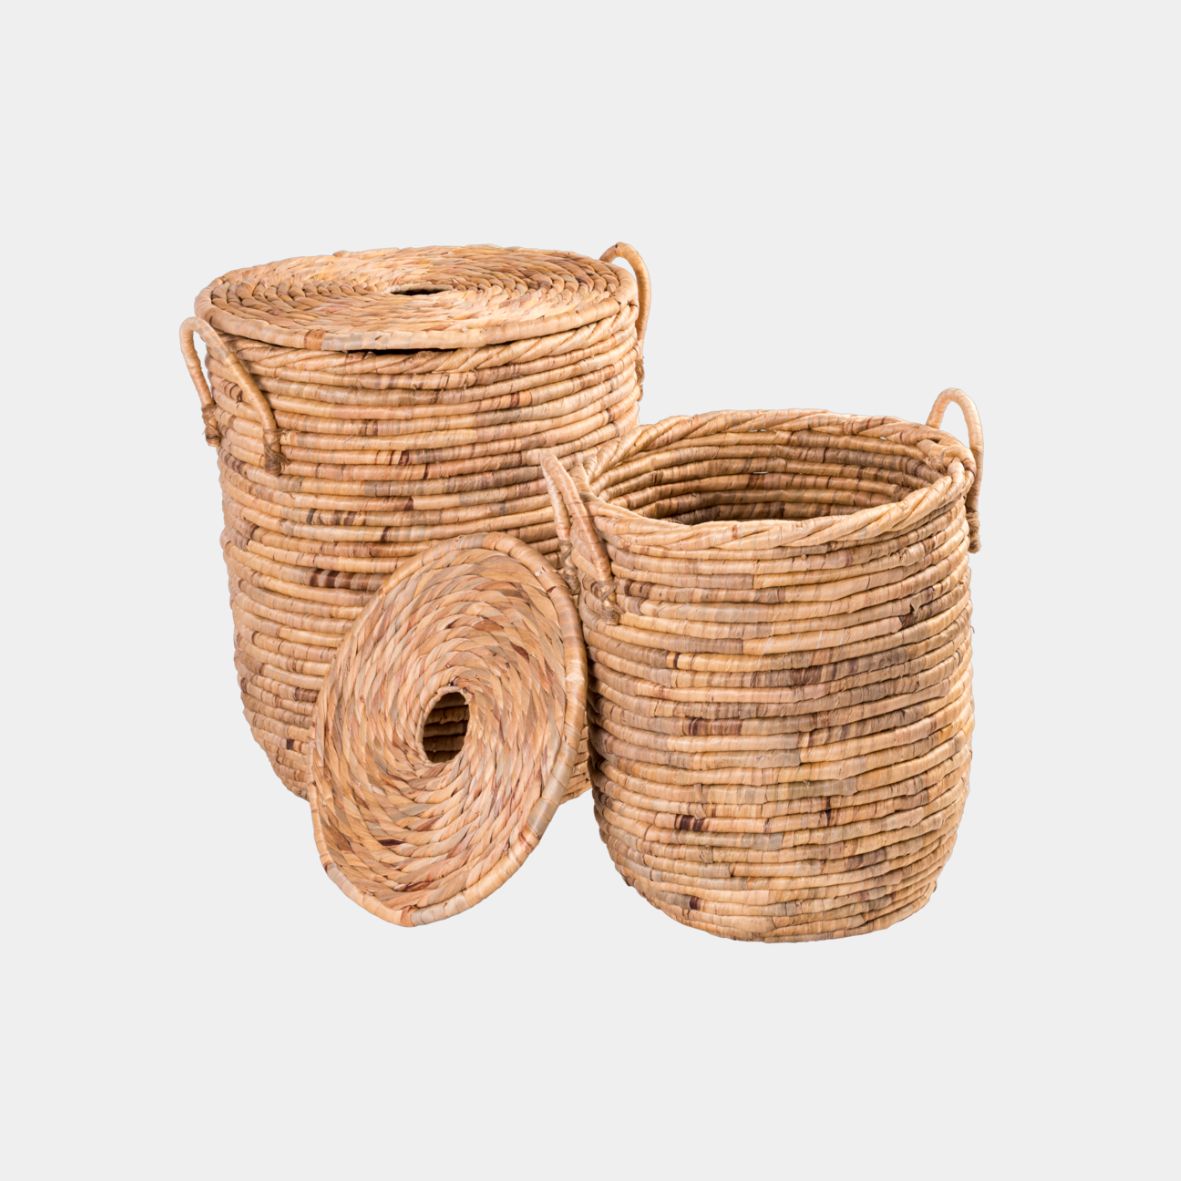 Caja mimbre madera rectangular teja blanco 36x26x15 cm - NOVEDAD -  Publipack Calafell. Tienda online de bolsas y productos de embalaje  comercial.